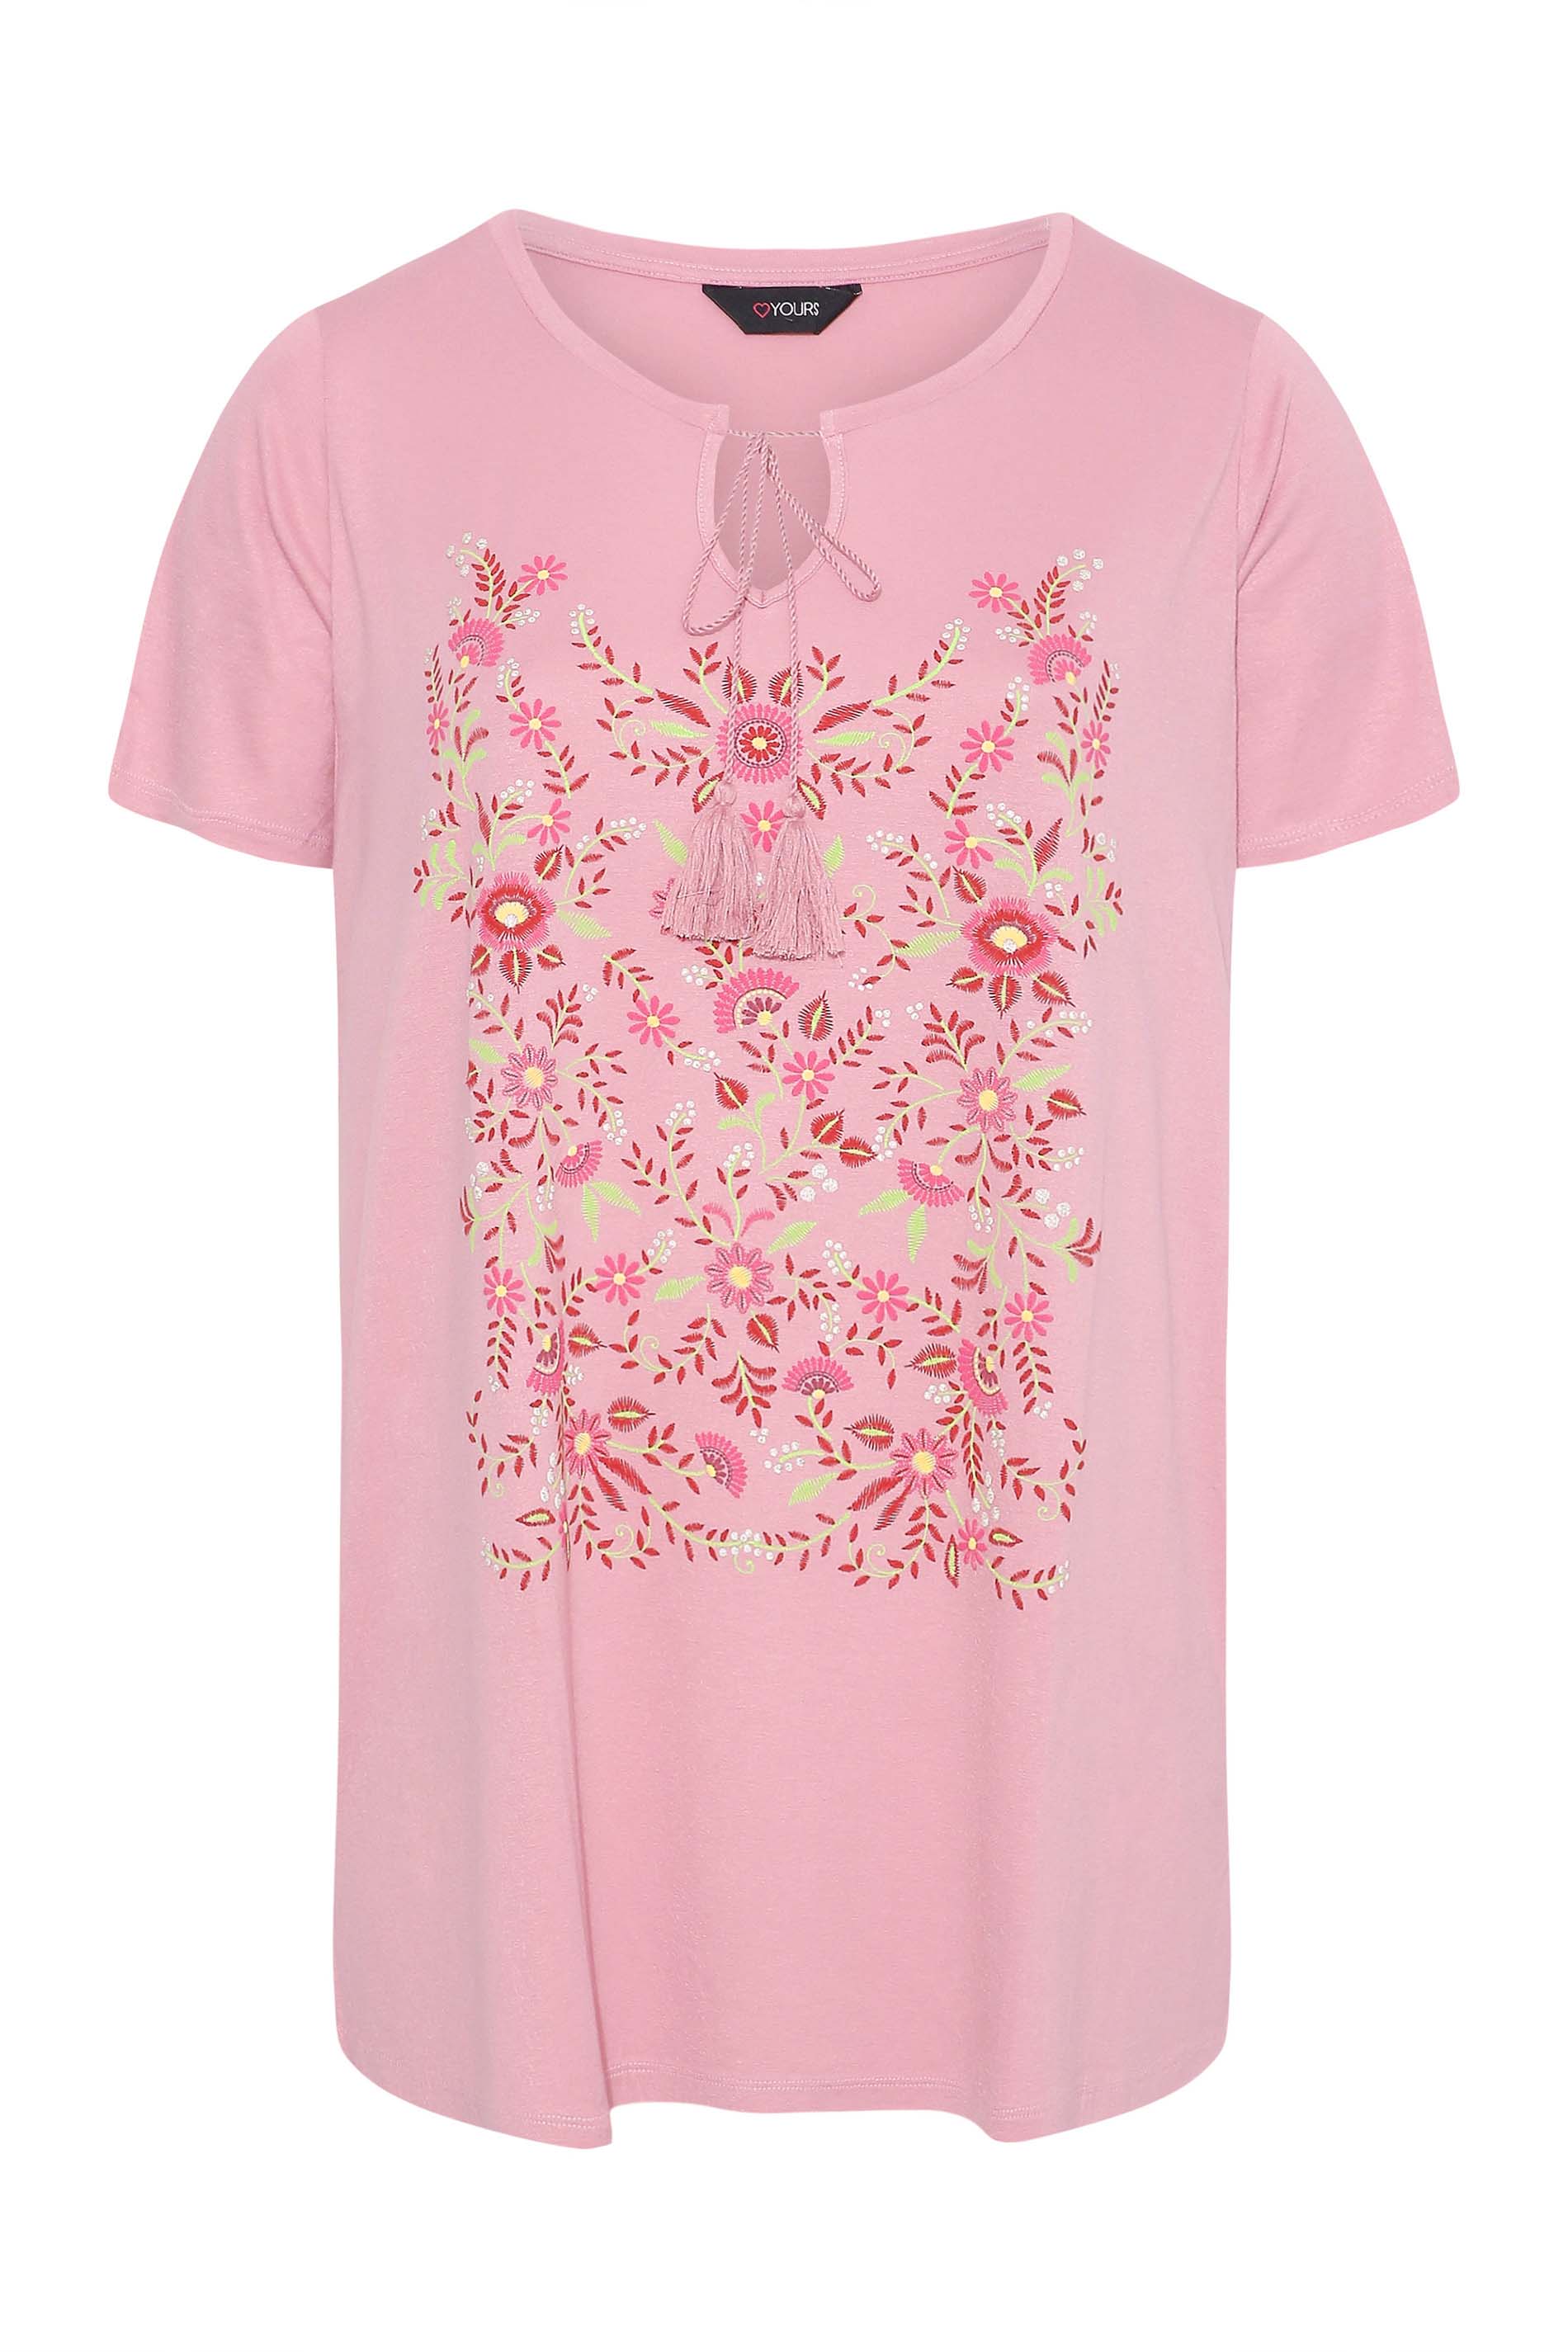 Grande taille  Tops Grande taille  T-Shirts | T-Shirt Rose Design Floral Manches Découpées - EH72601